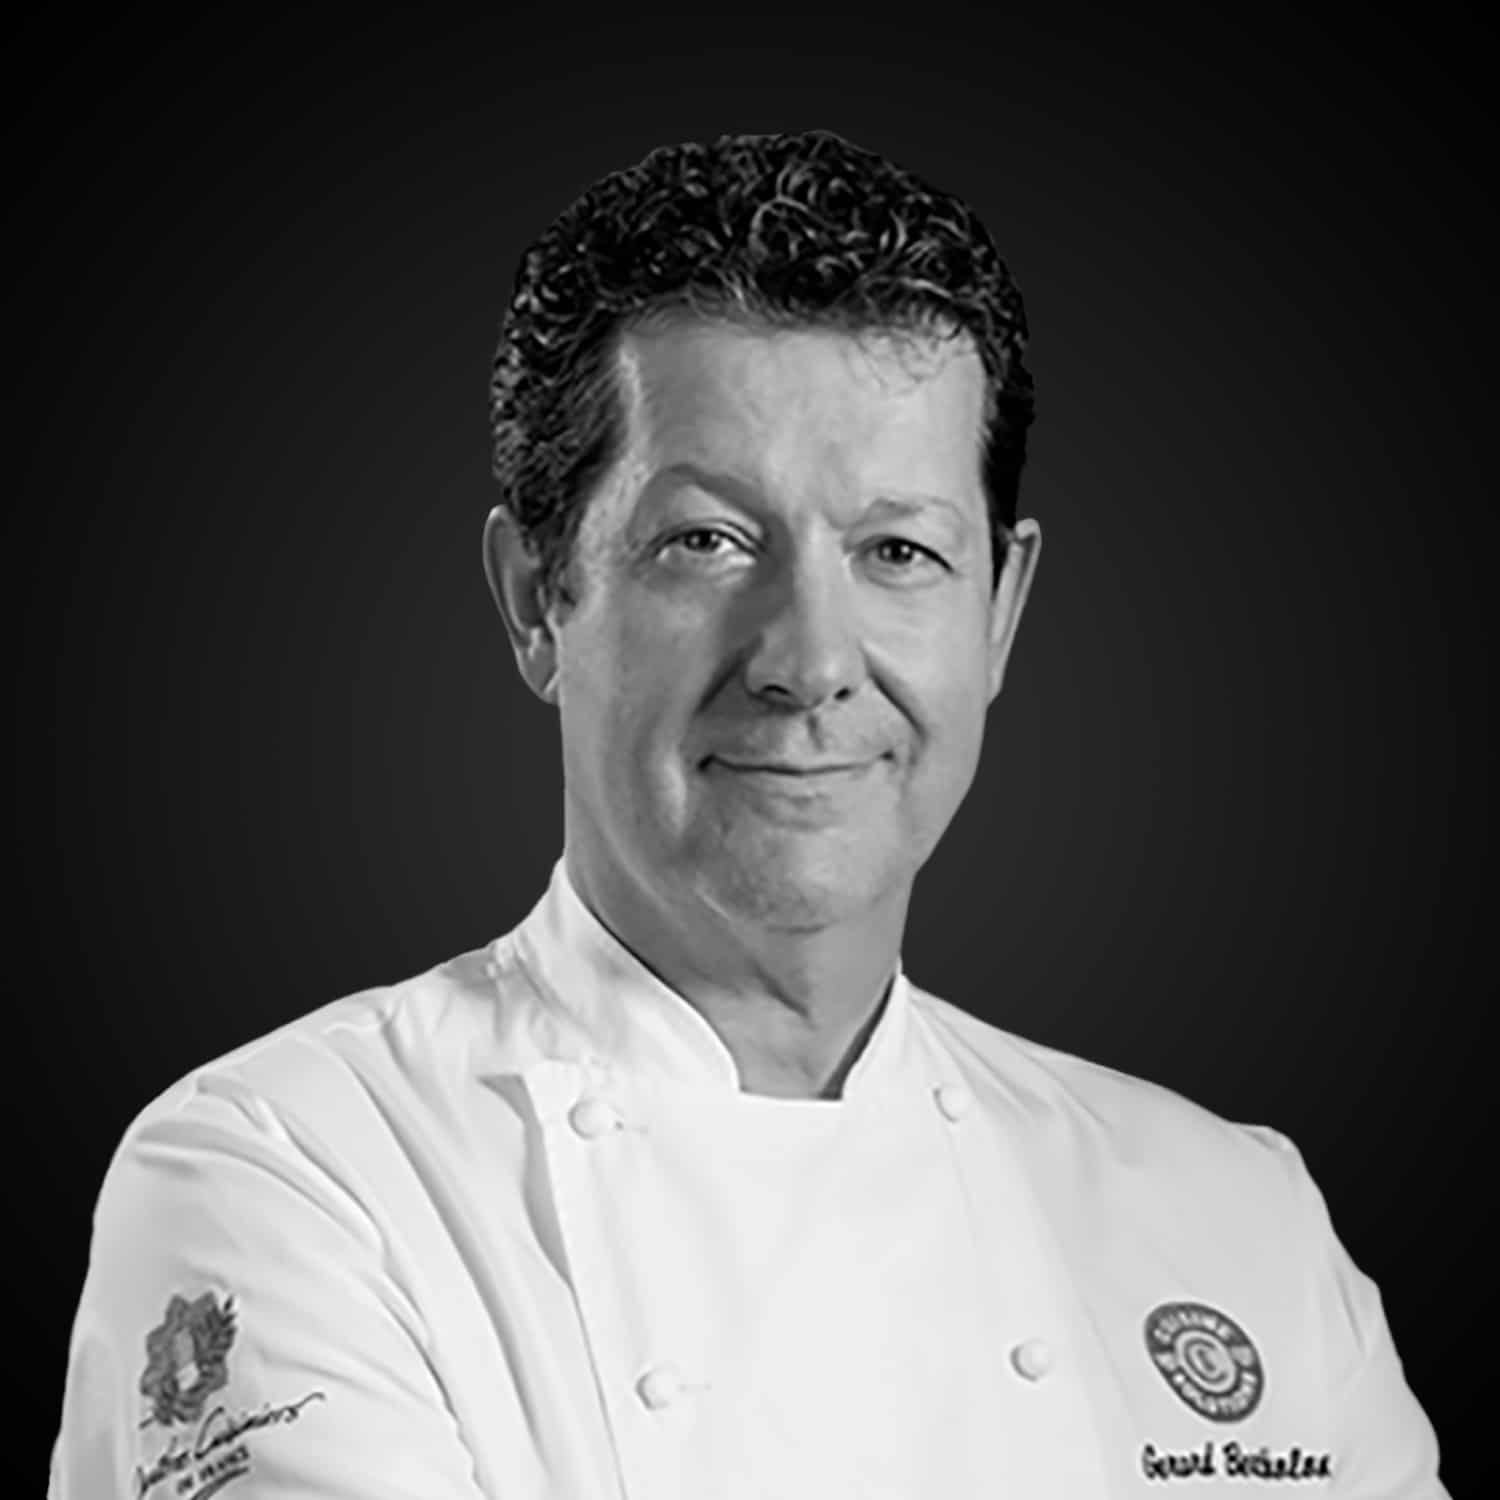 Portrait of Chef Gerard Bertholon